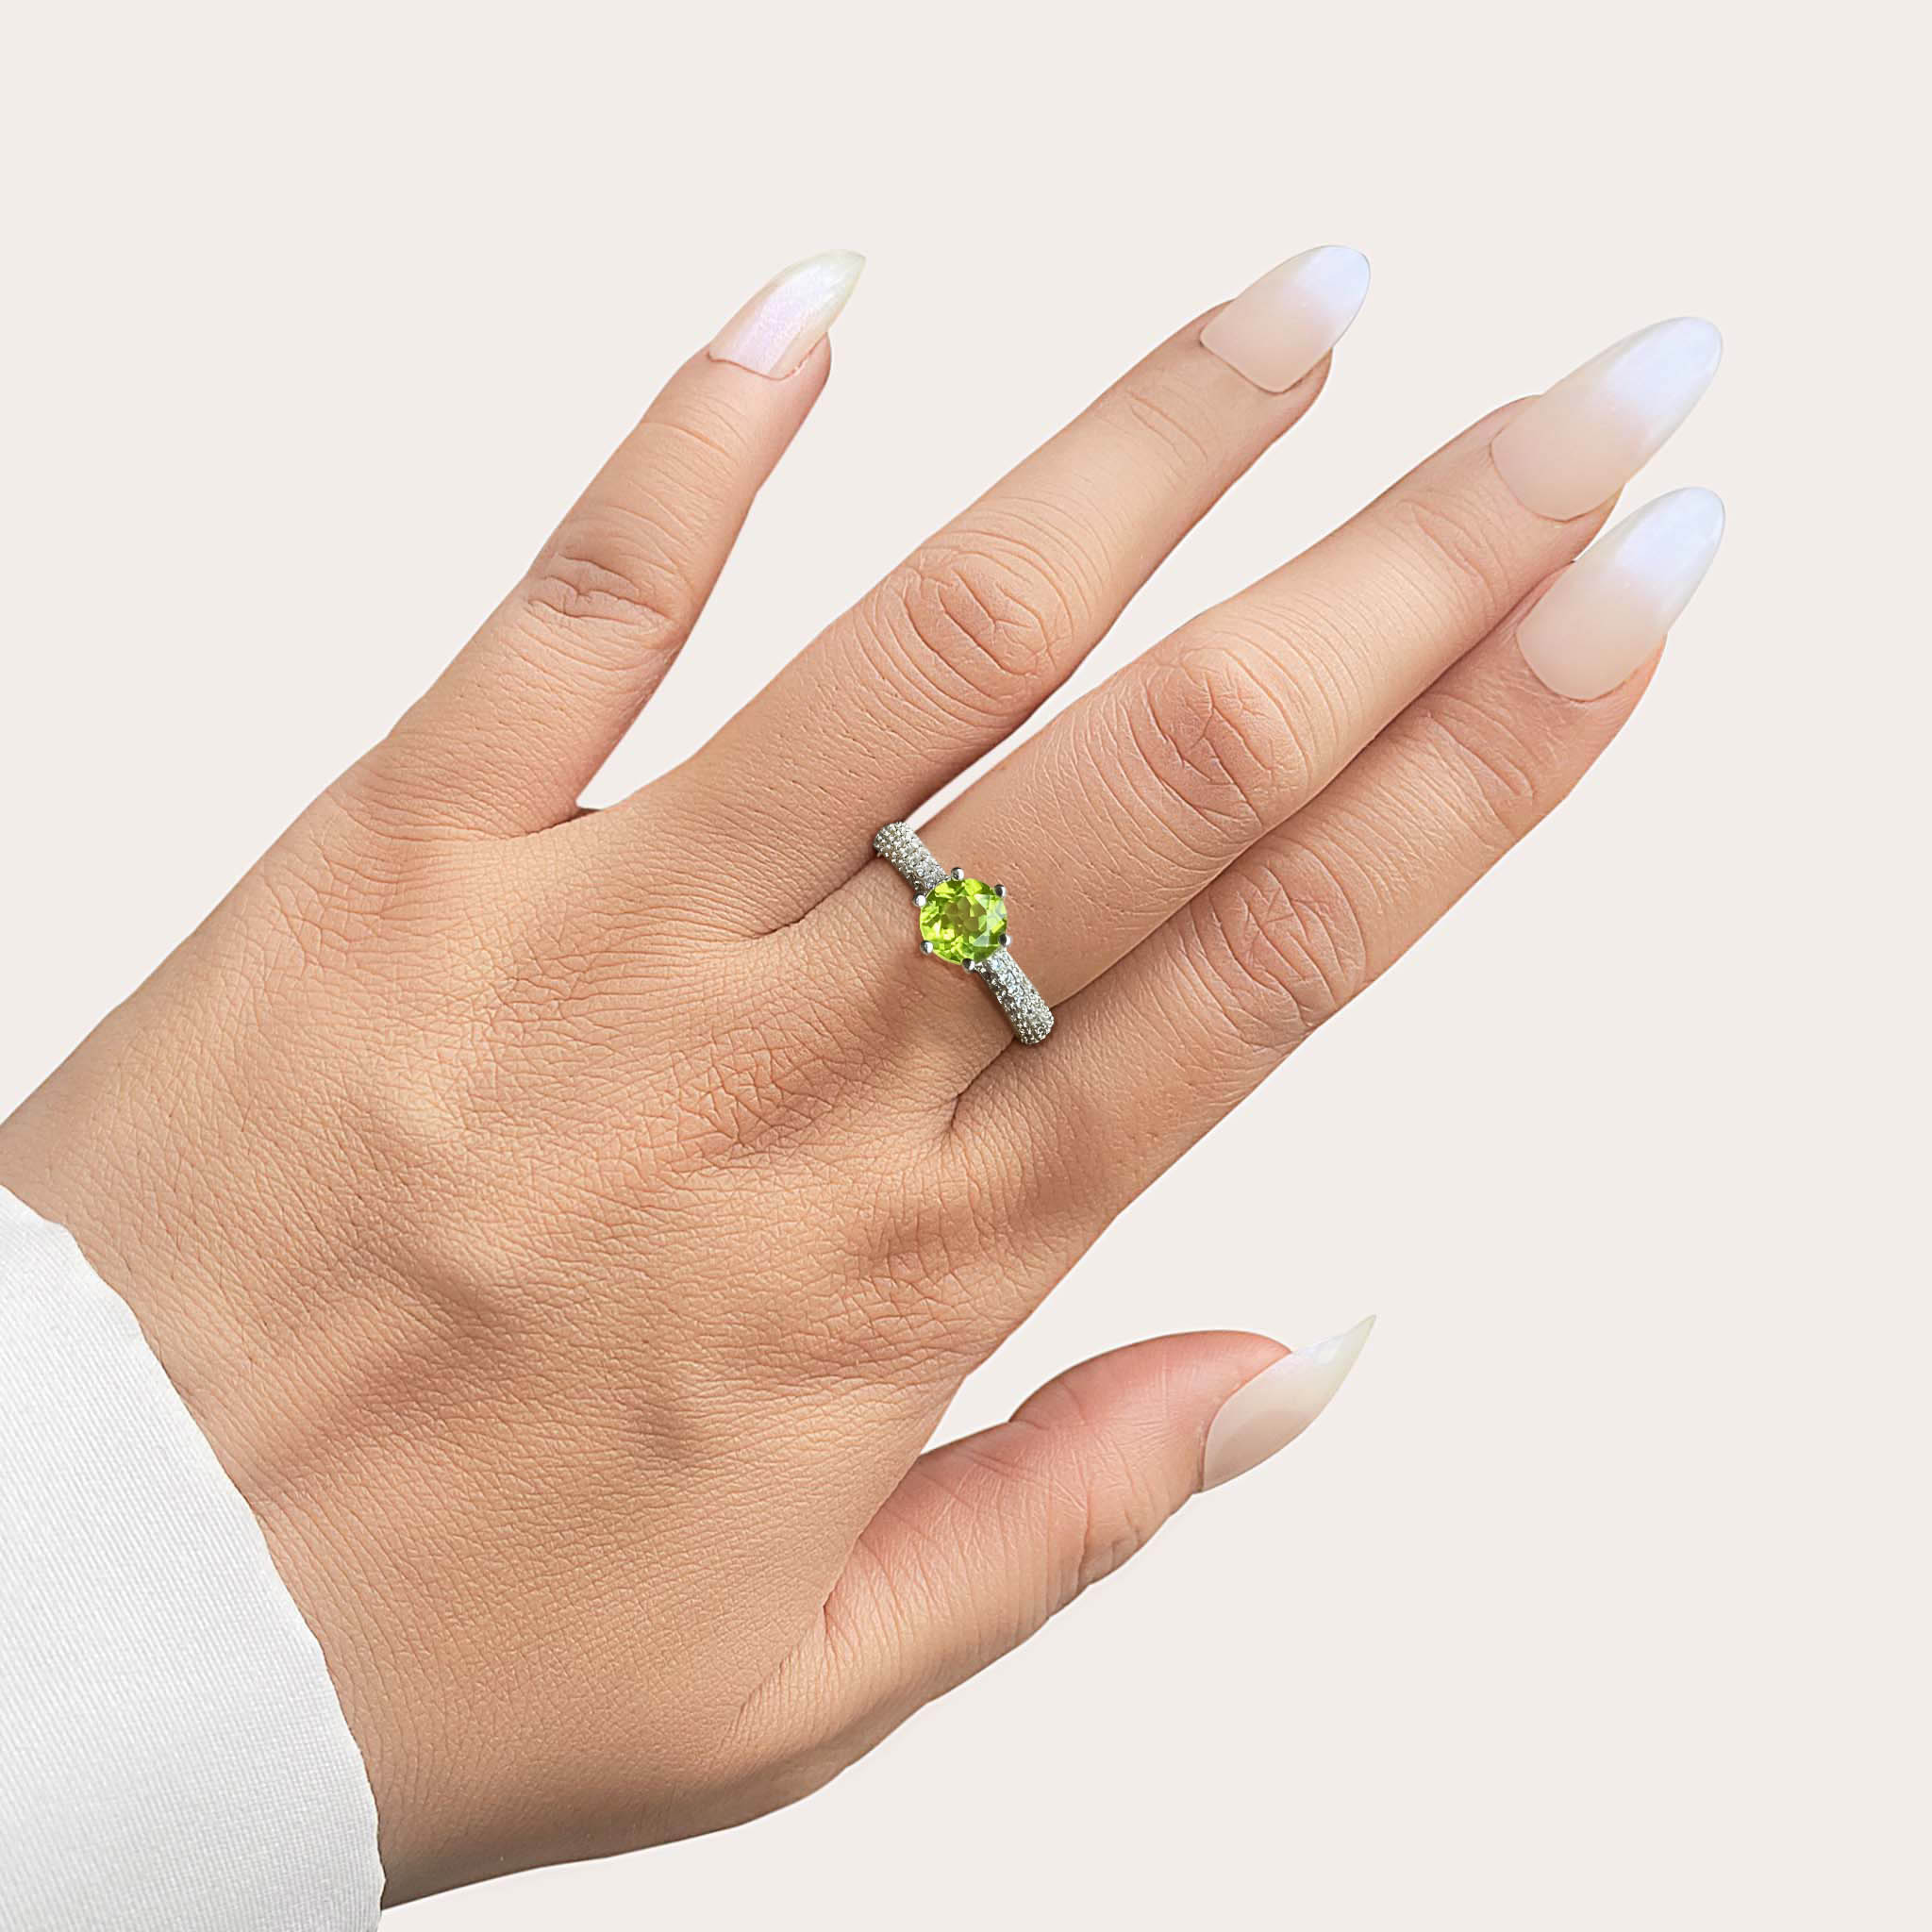 Elegant Luminous Natural Round Green Peridot Sterling Silver Pave Ring